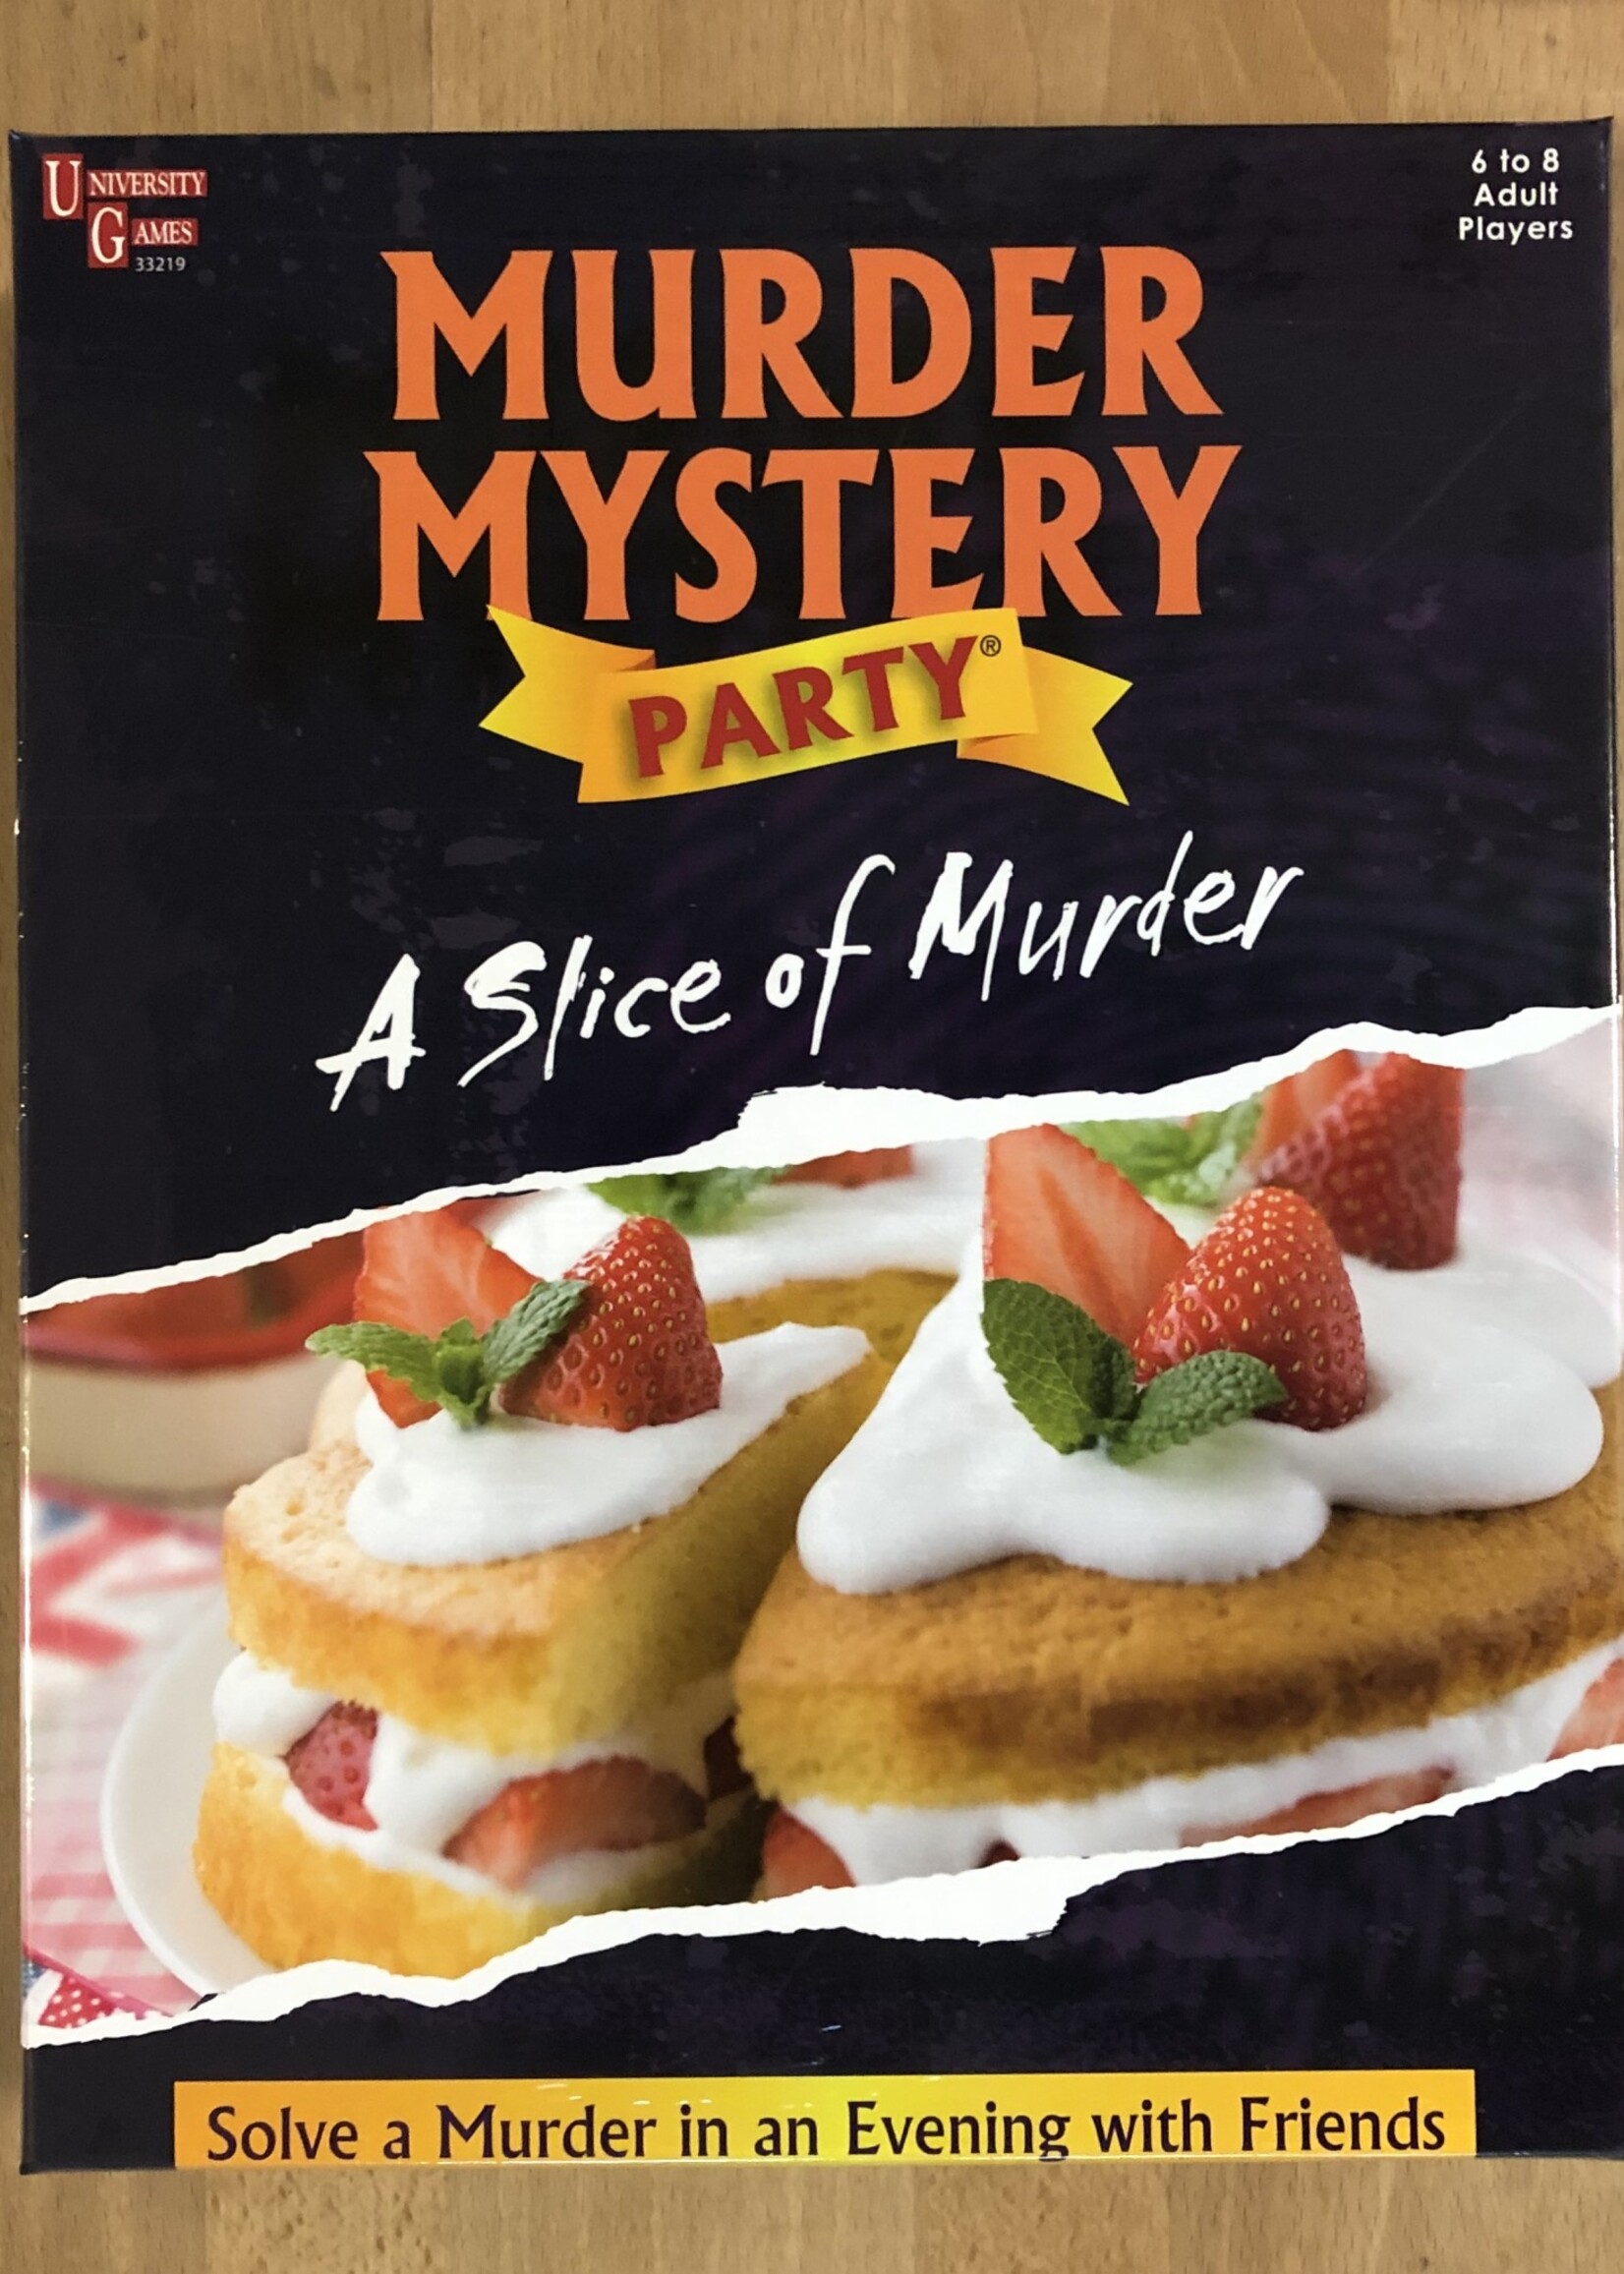 University Games Murder Mystery - A Slice of Murder